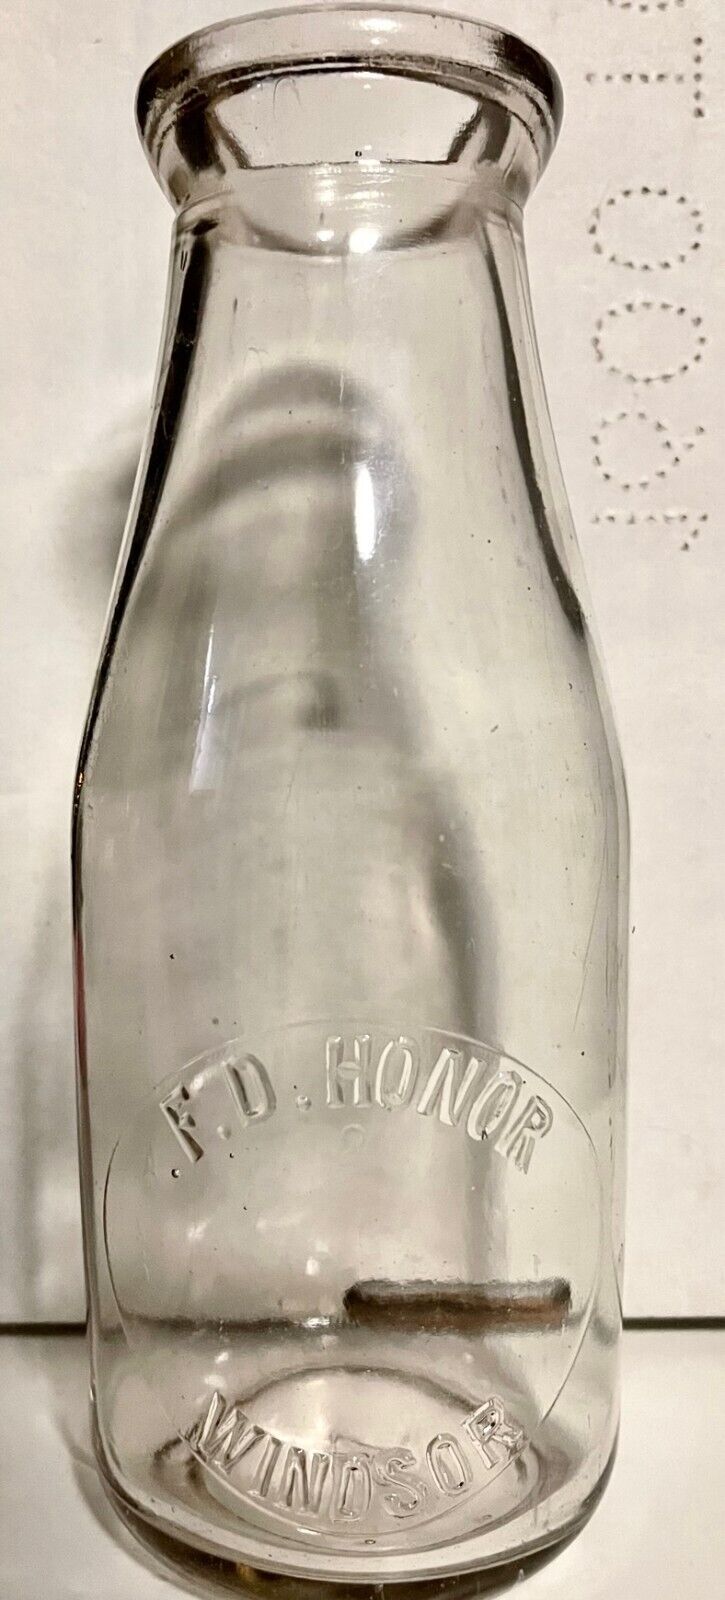 Excellent PINT Embossed Round Milk Bottle - F.D. HONOR DAIRY Windsor, Ontario